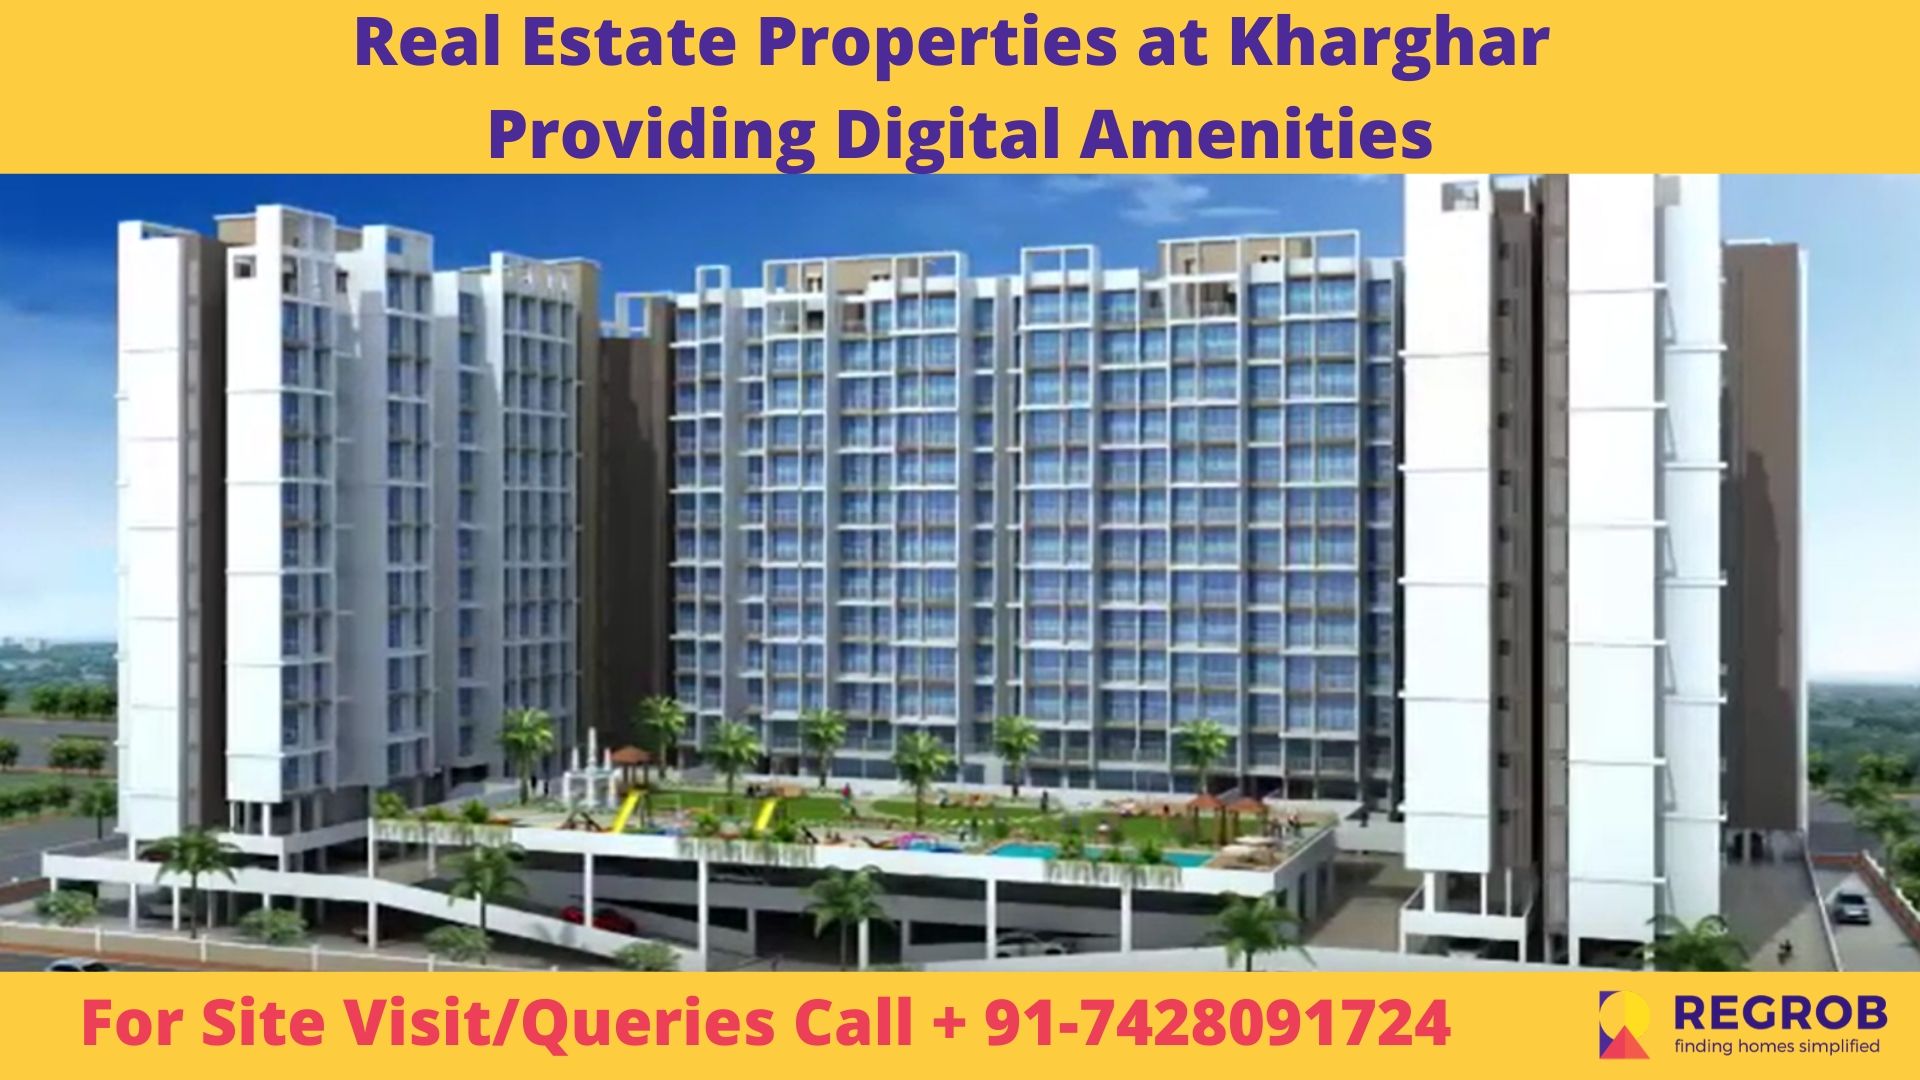 Real Estate Properties at Kharghar Providing Digital Amenities